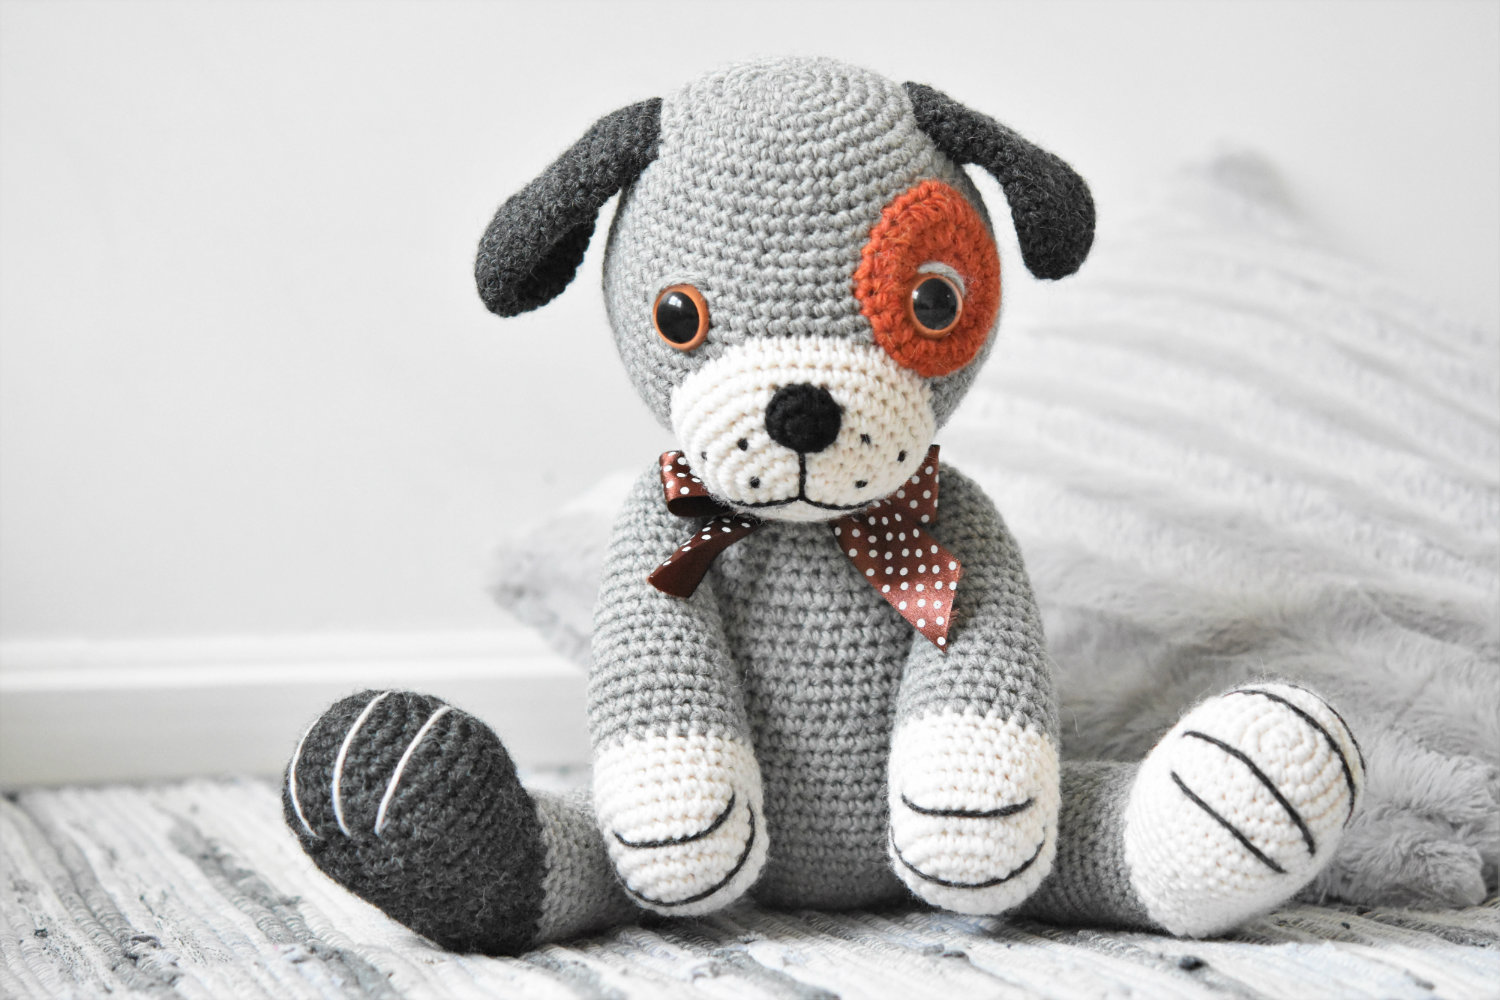 crochet big puppy pattern